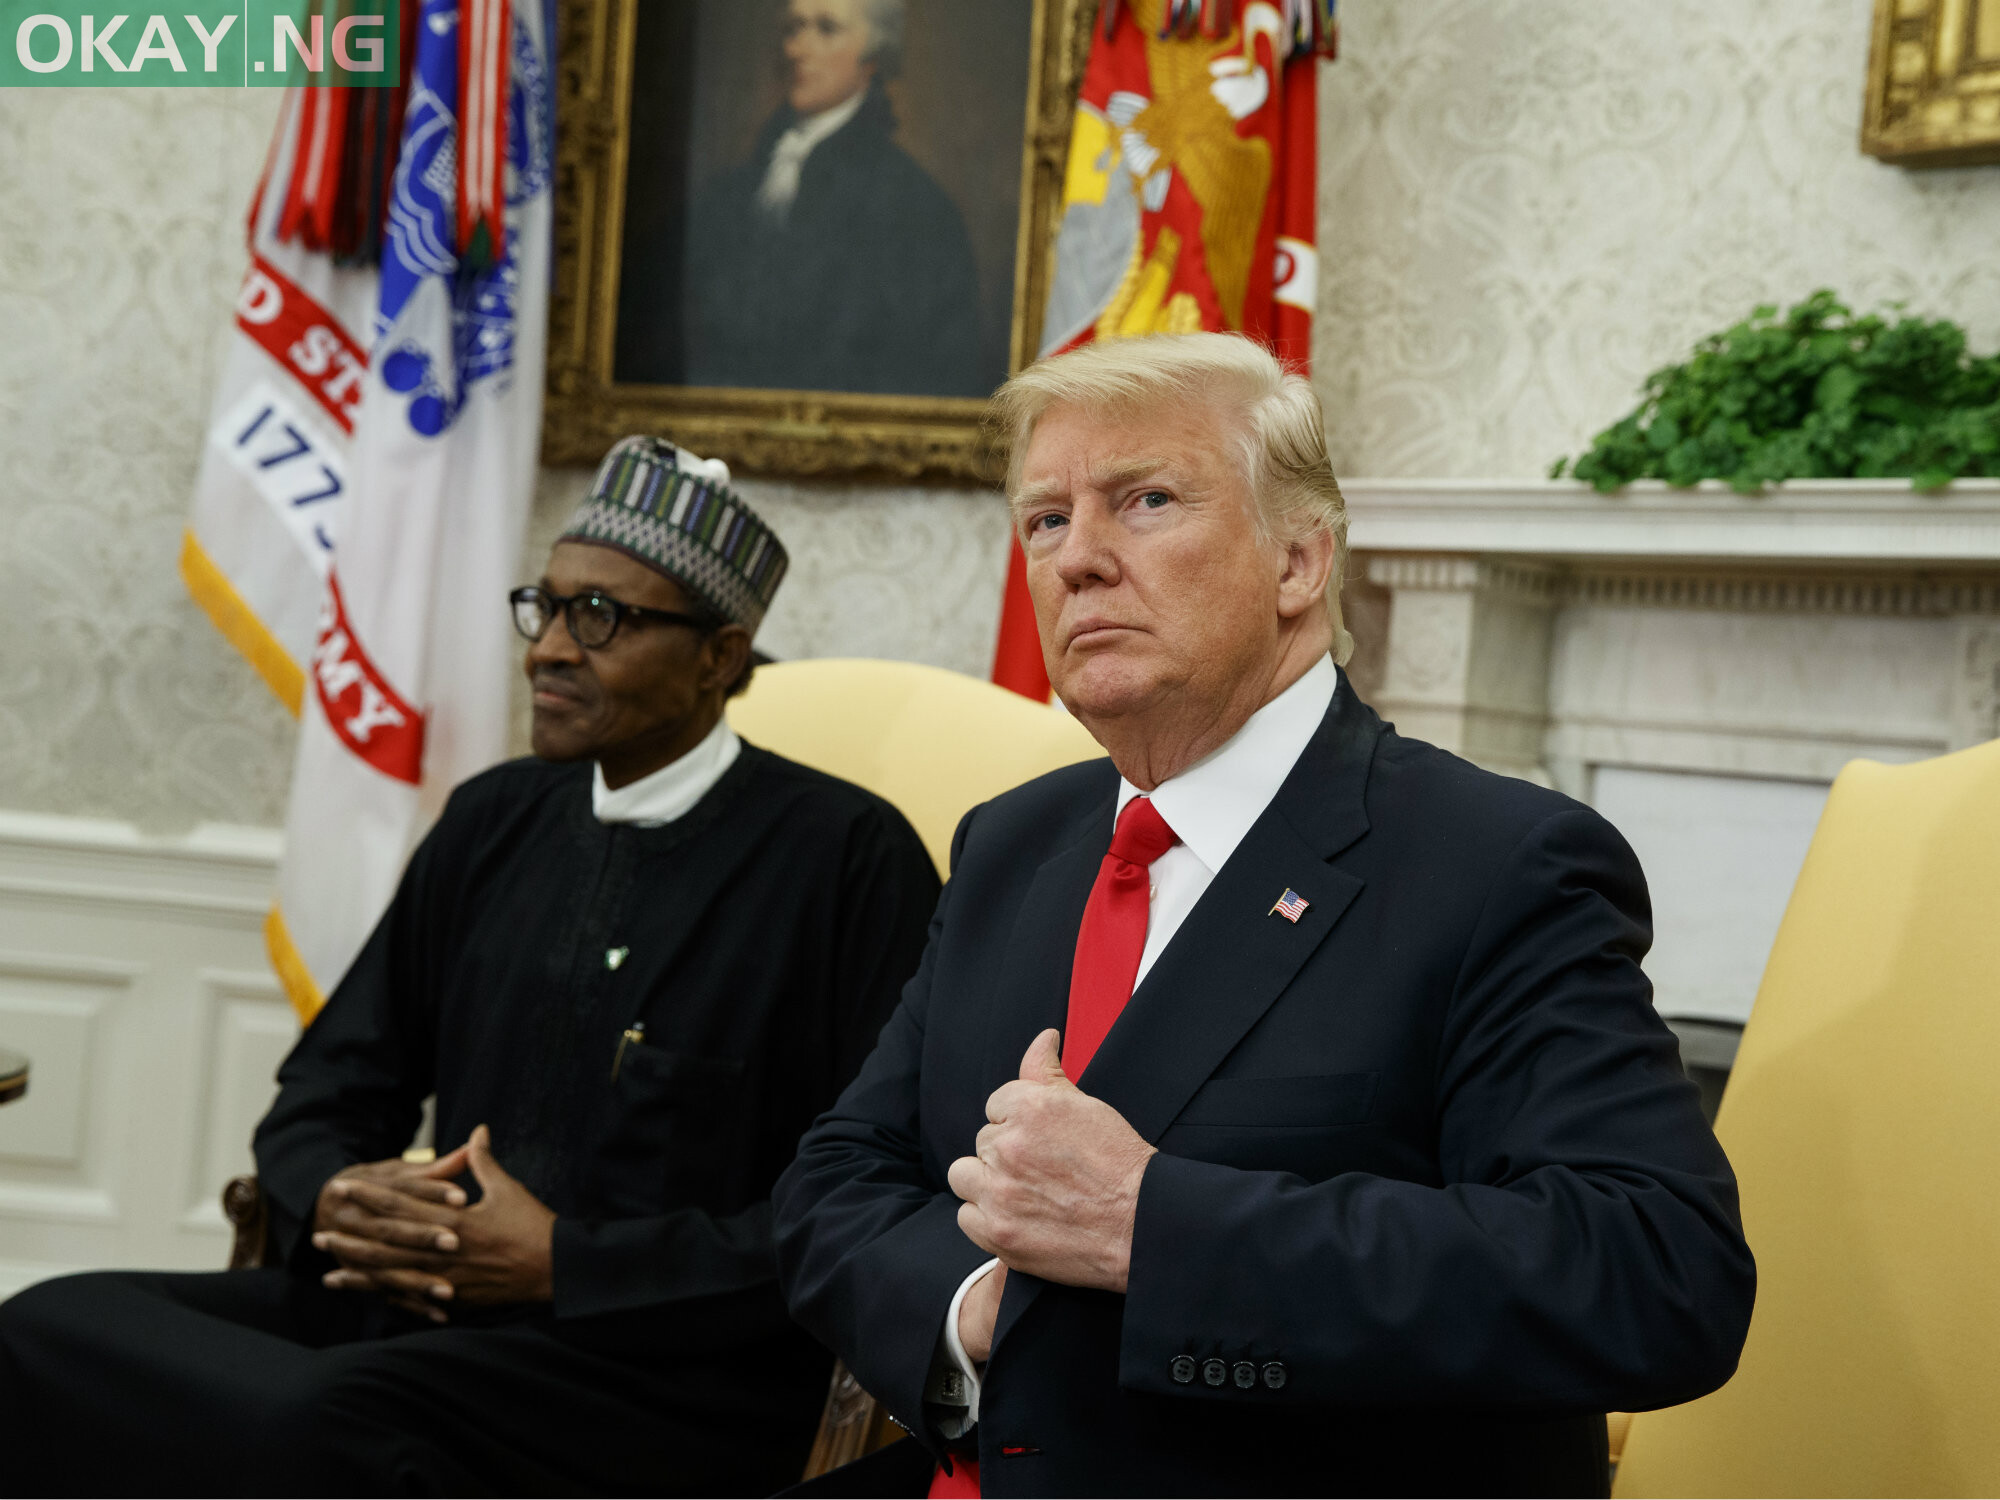 Buhari and Trump